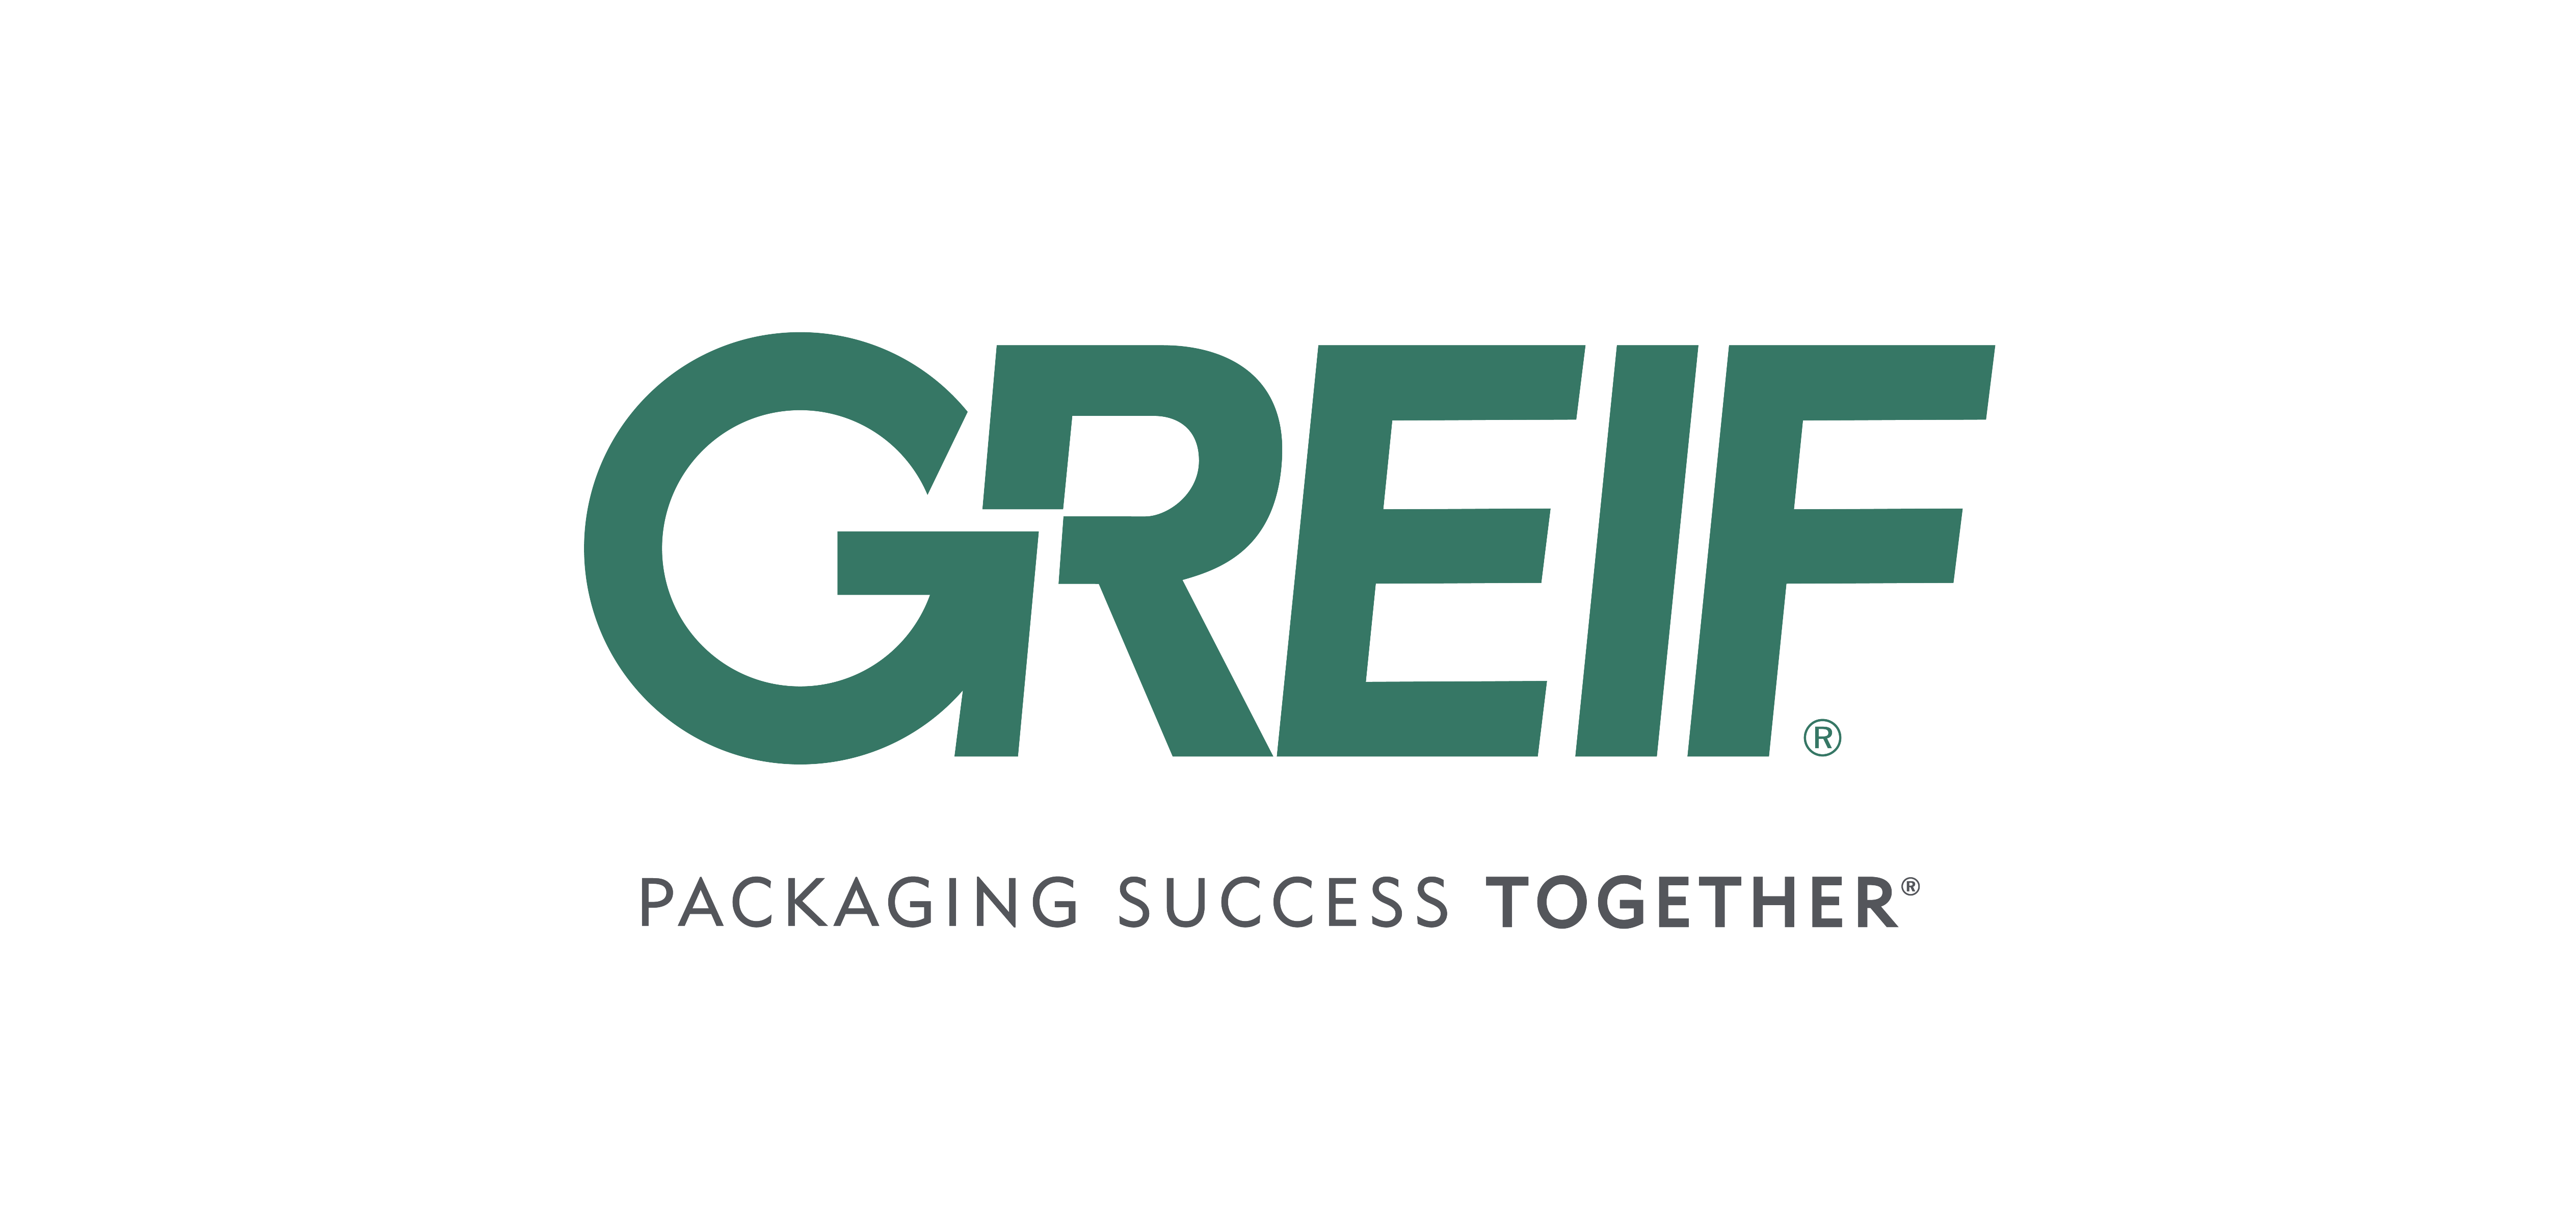 Greif_logo.png